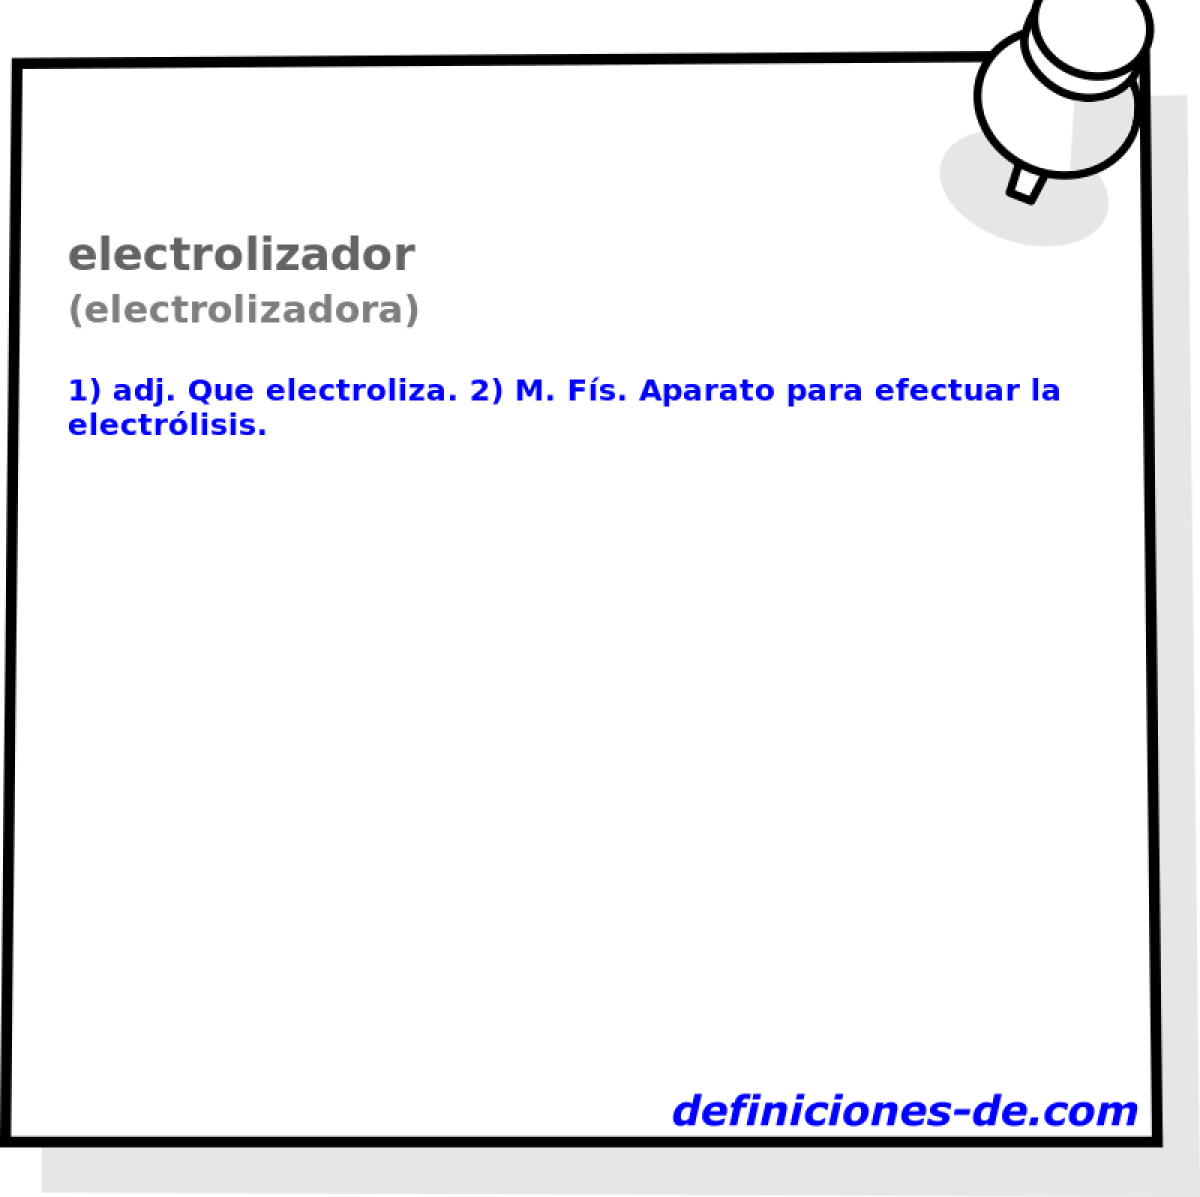 electrolizador (electrolizadora)